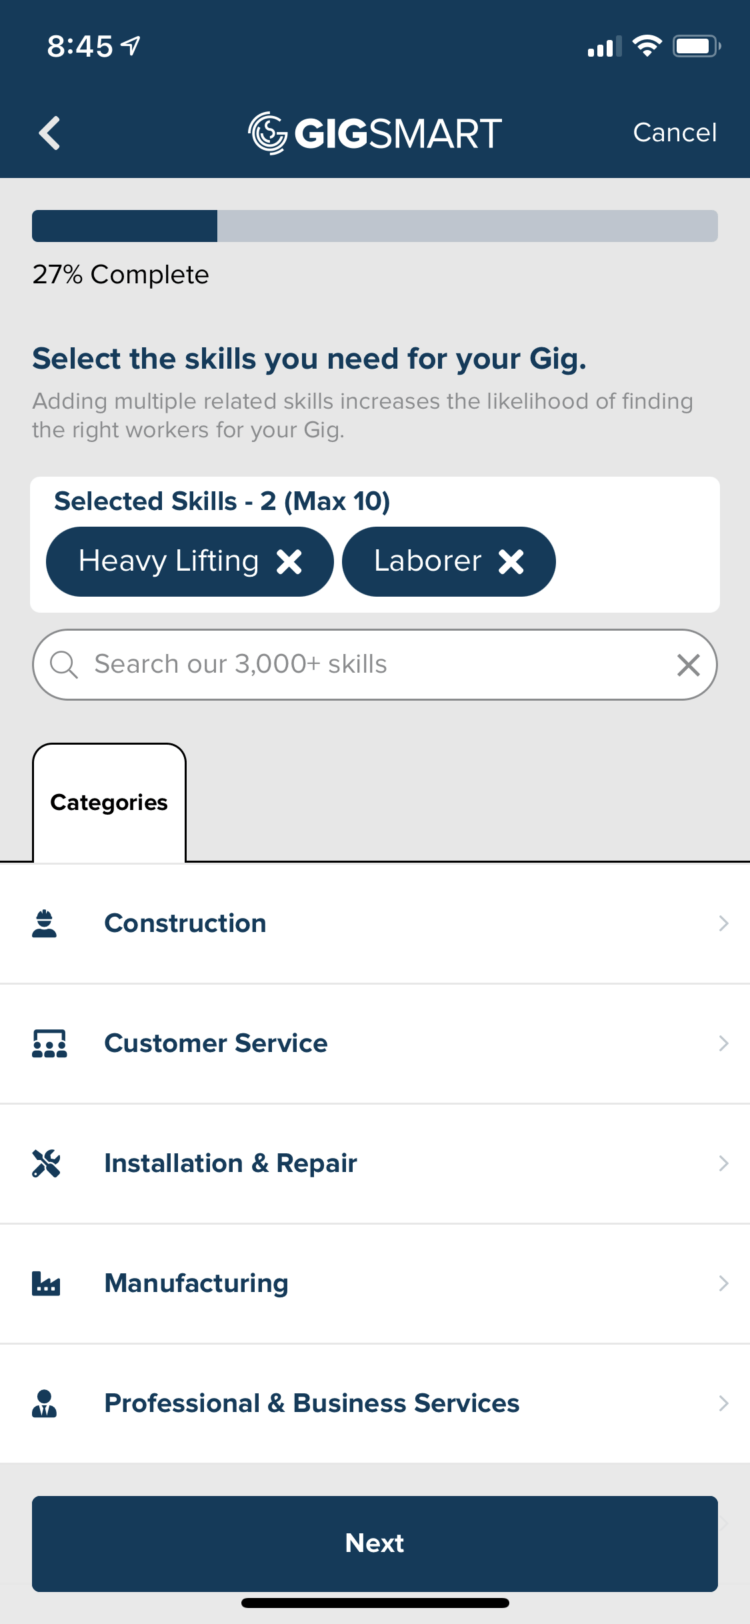 Match to 3,000+ worker skills